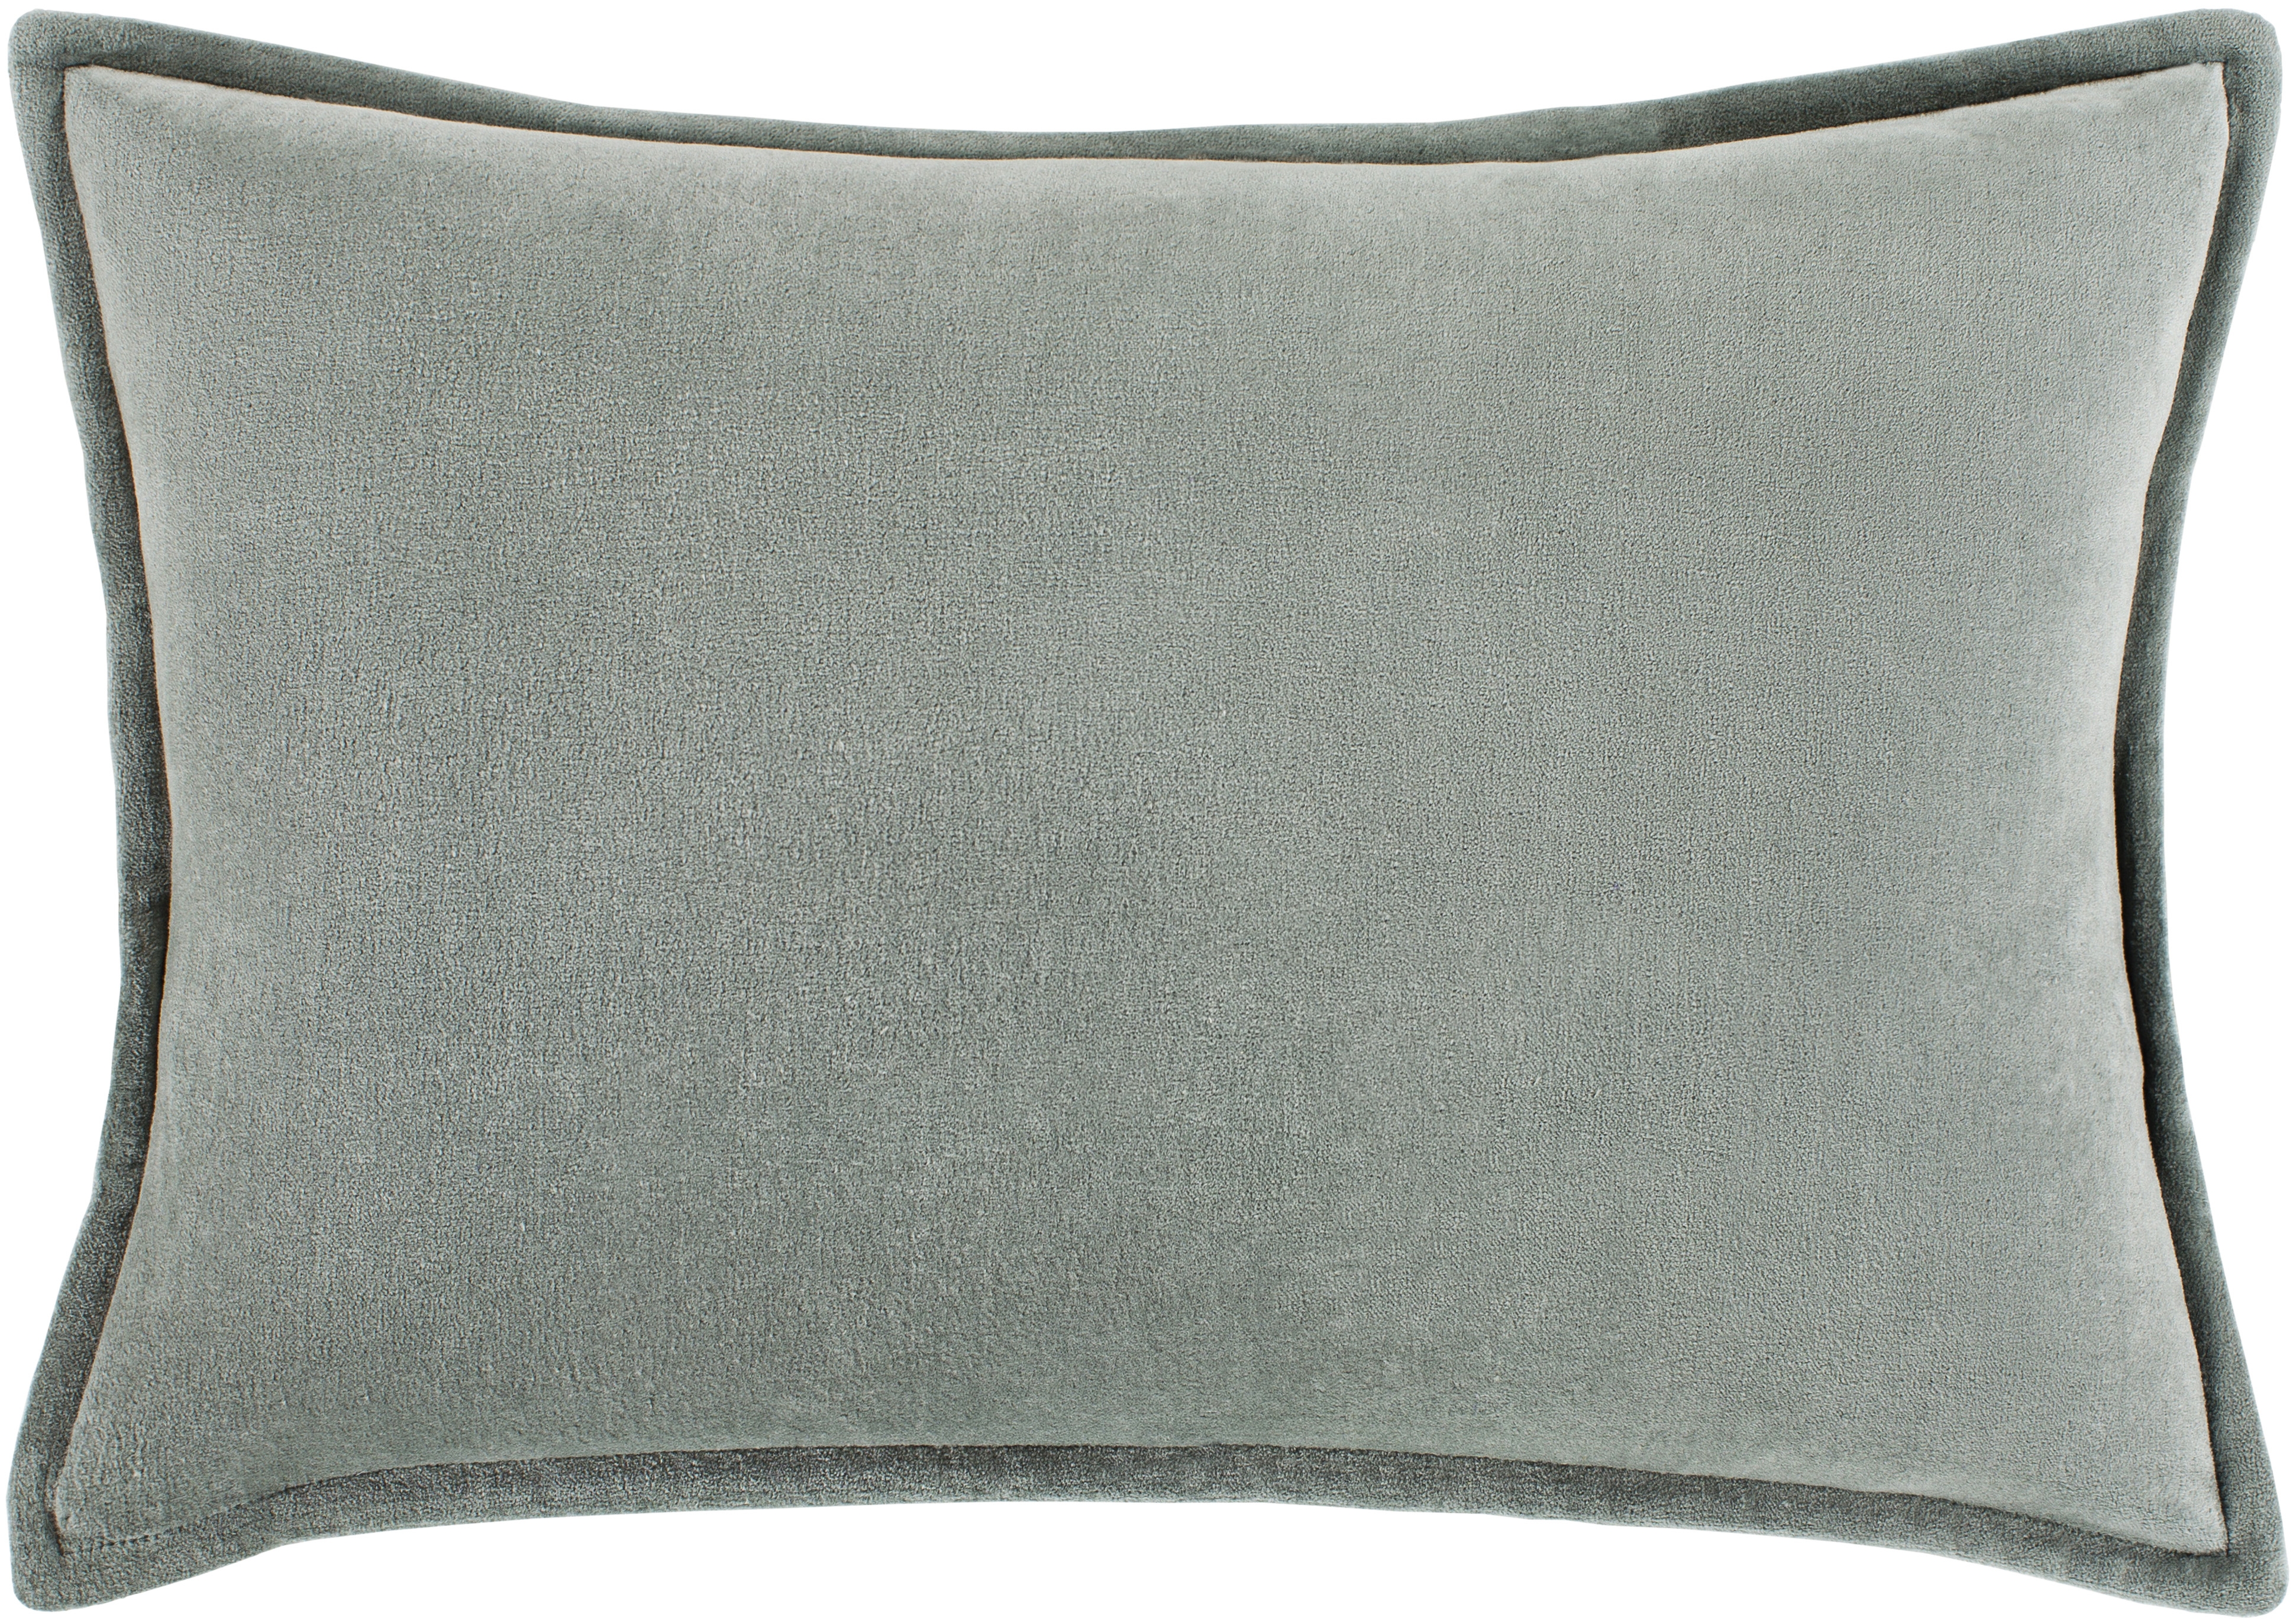 Cotton Velvet Throw Pillow, 18" x 18", pillow cover only - Image 1